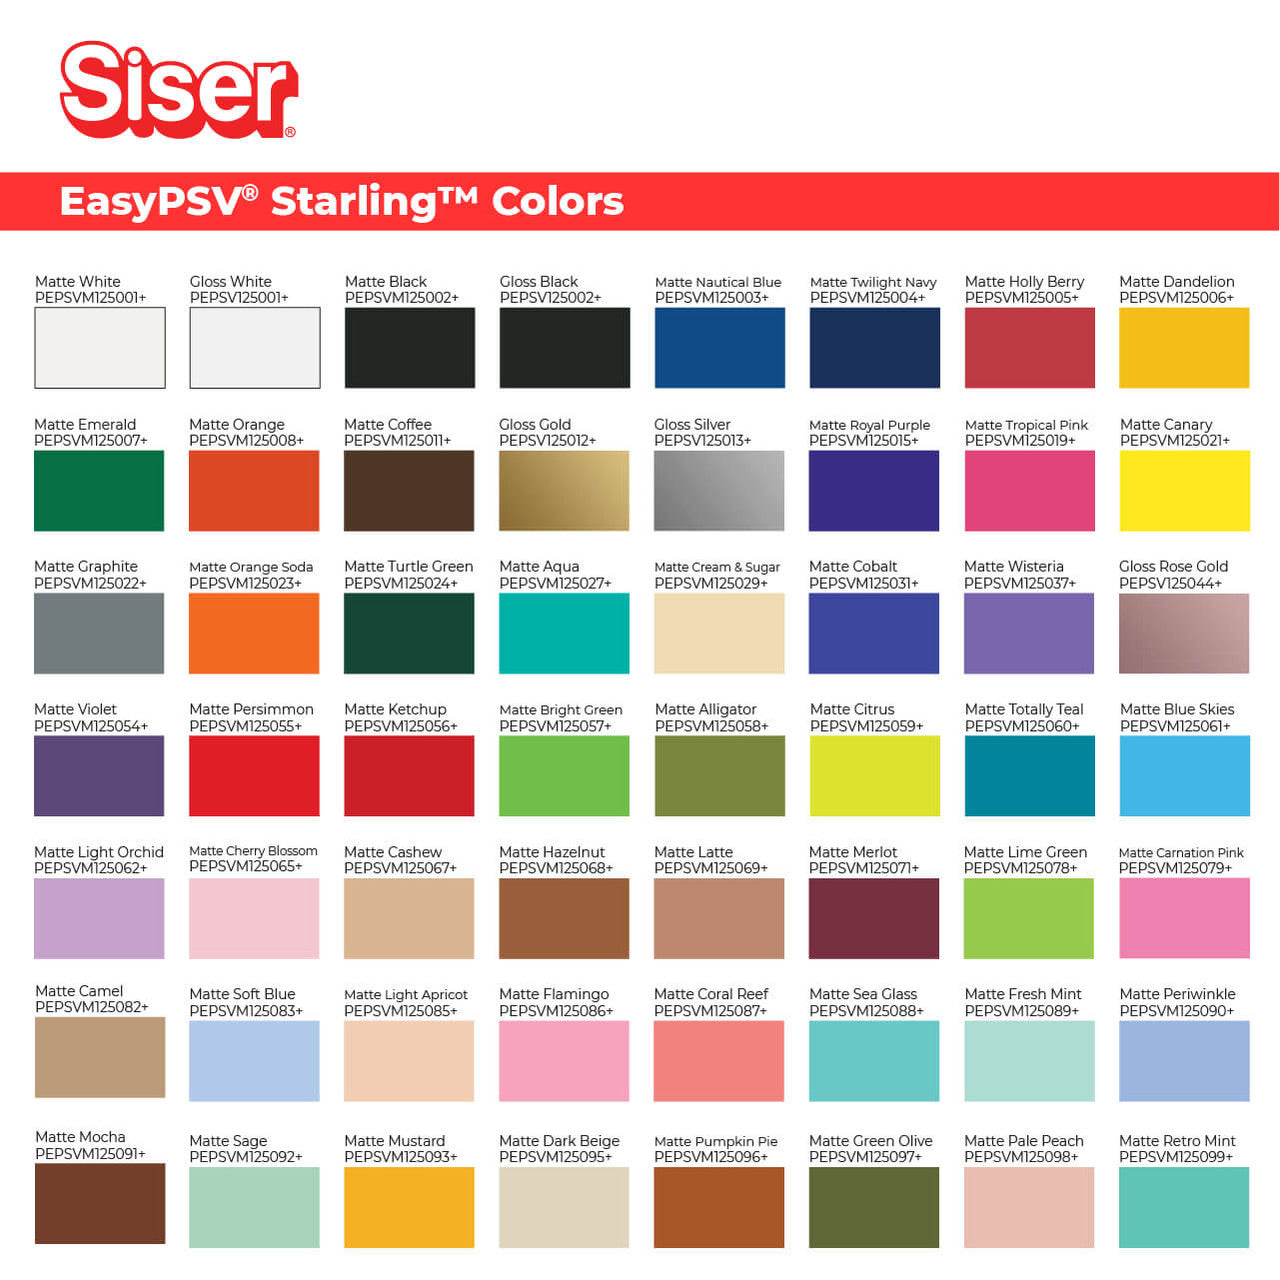 Siser EasyPSV Starling Permanent Pressure Sensitive Adhesive Vinyl 12" Rolls for Sale at World Weidner